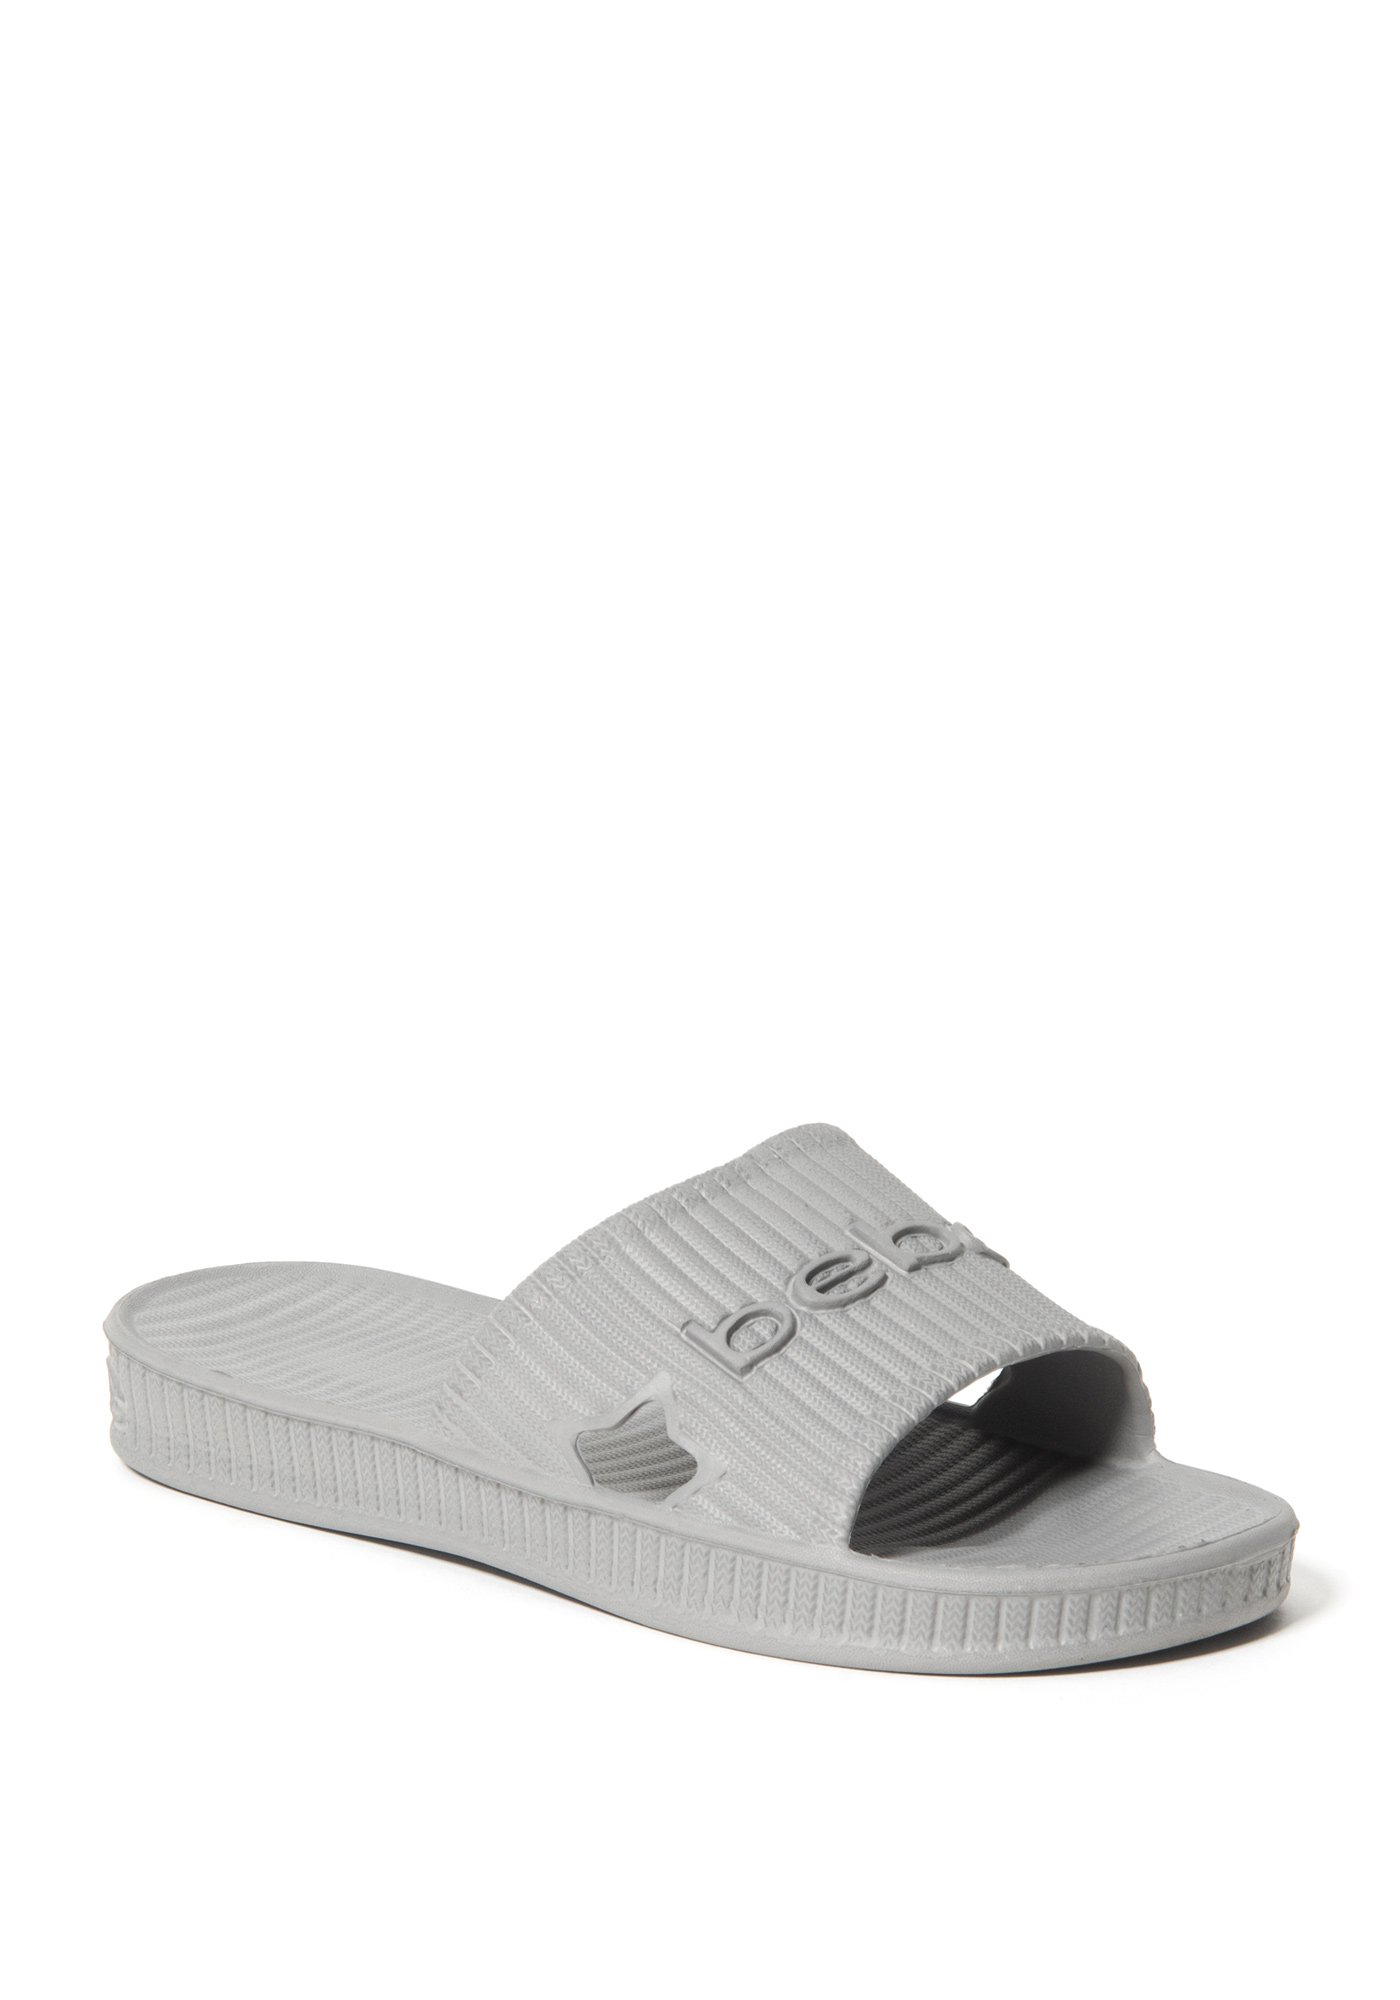 Bebe Women's Craze Logo Slides Shoe, Size 9 in Grey Synthetic